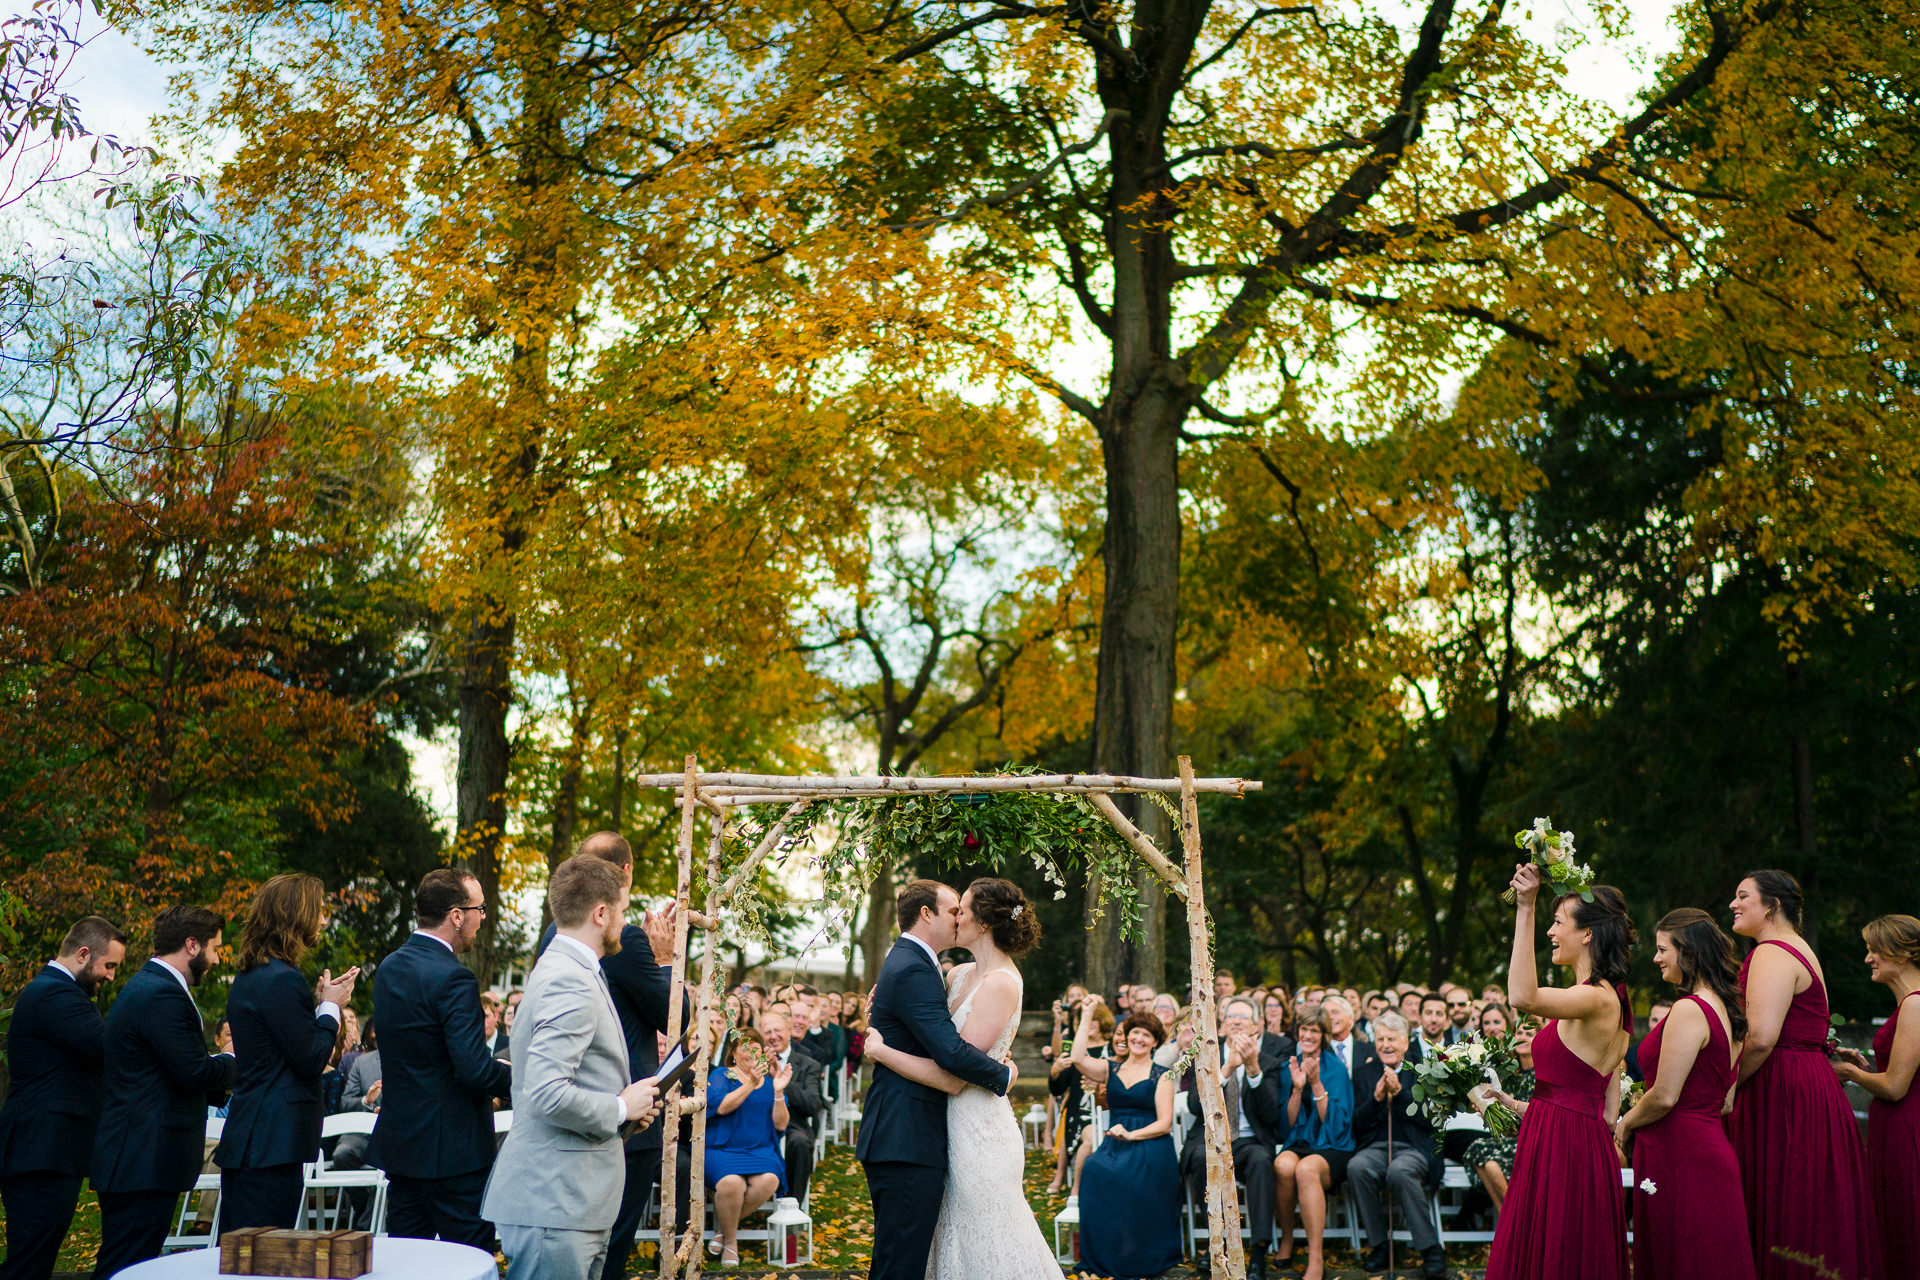 Outdoor wedding ceremony at Bertrams Garden near Philadelphia